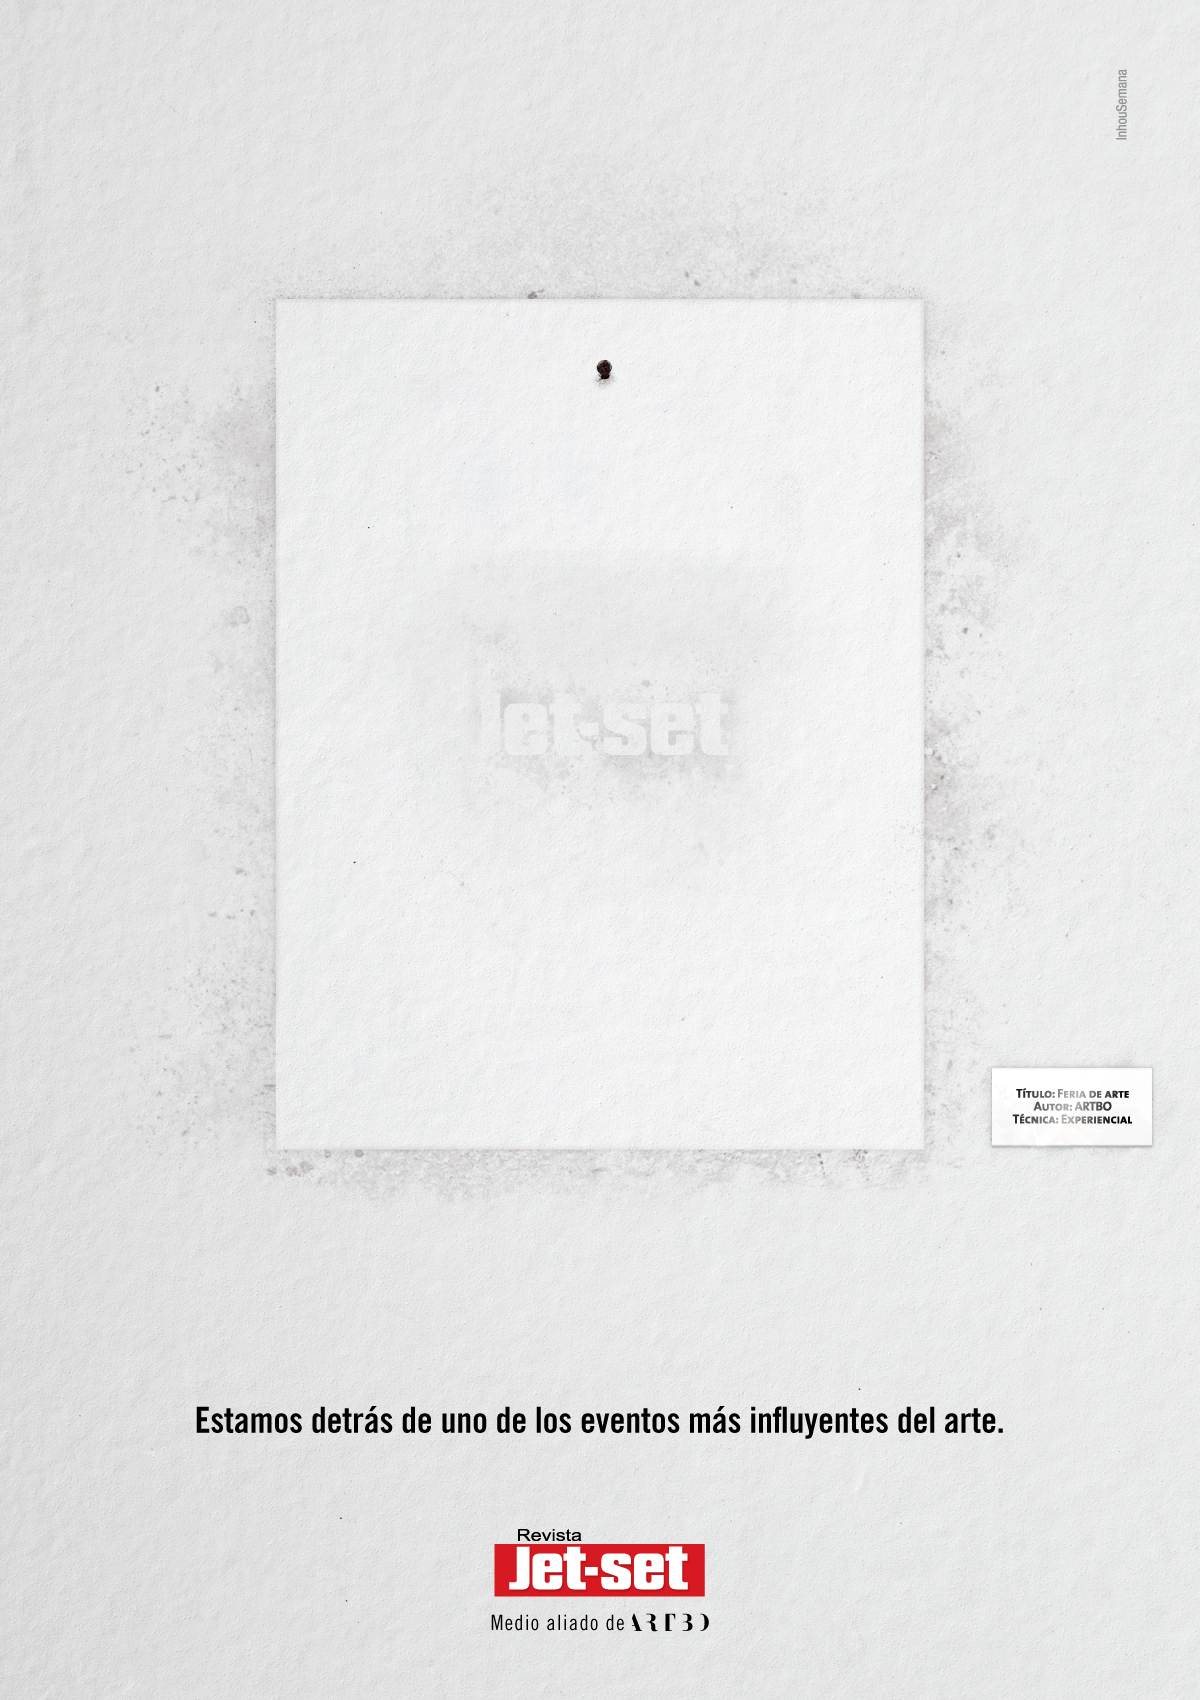 Advertising  publicidad jet-set artbo arte bogota copy Creativity gallery